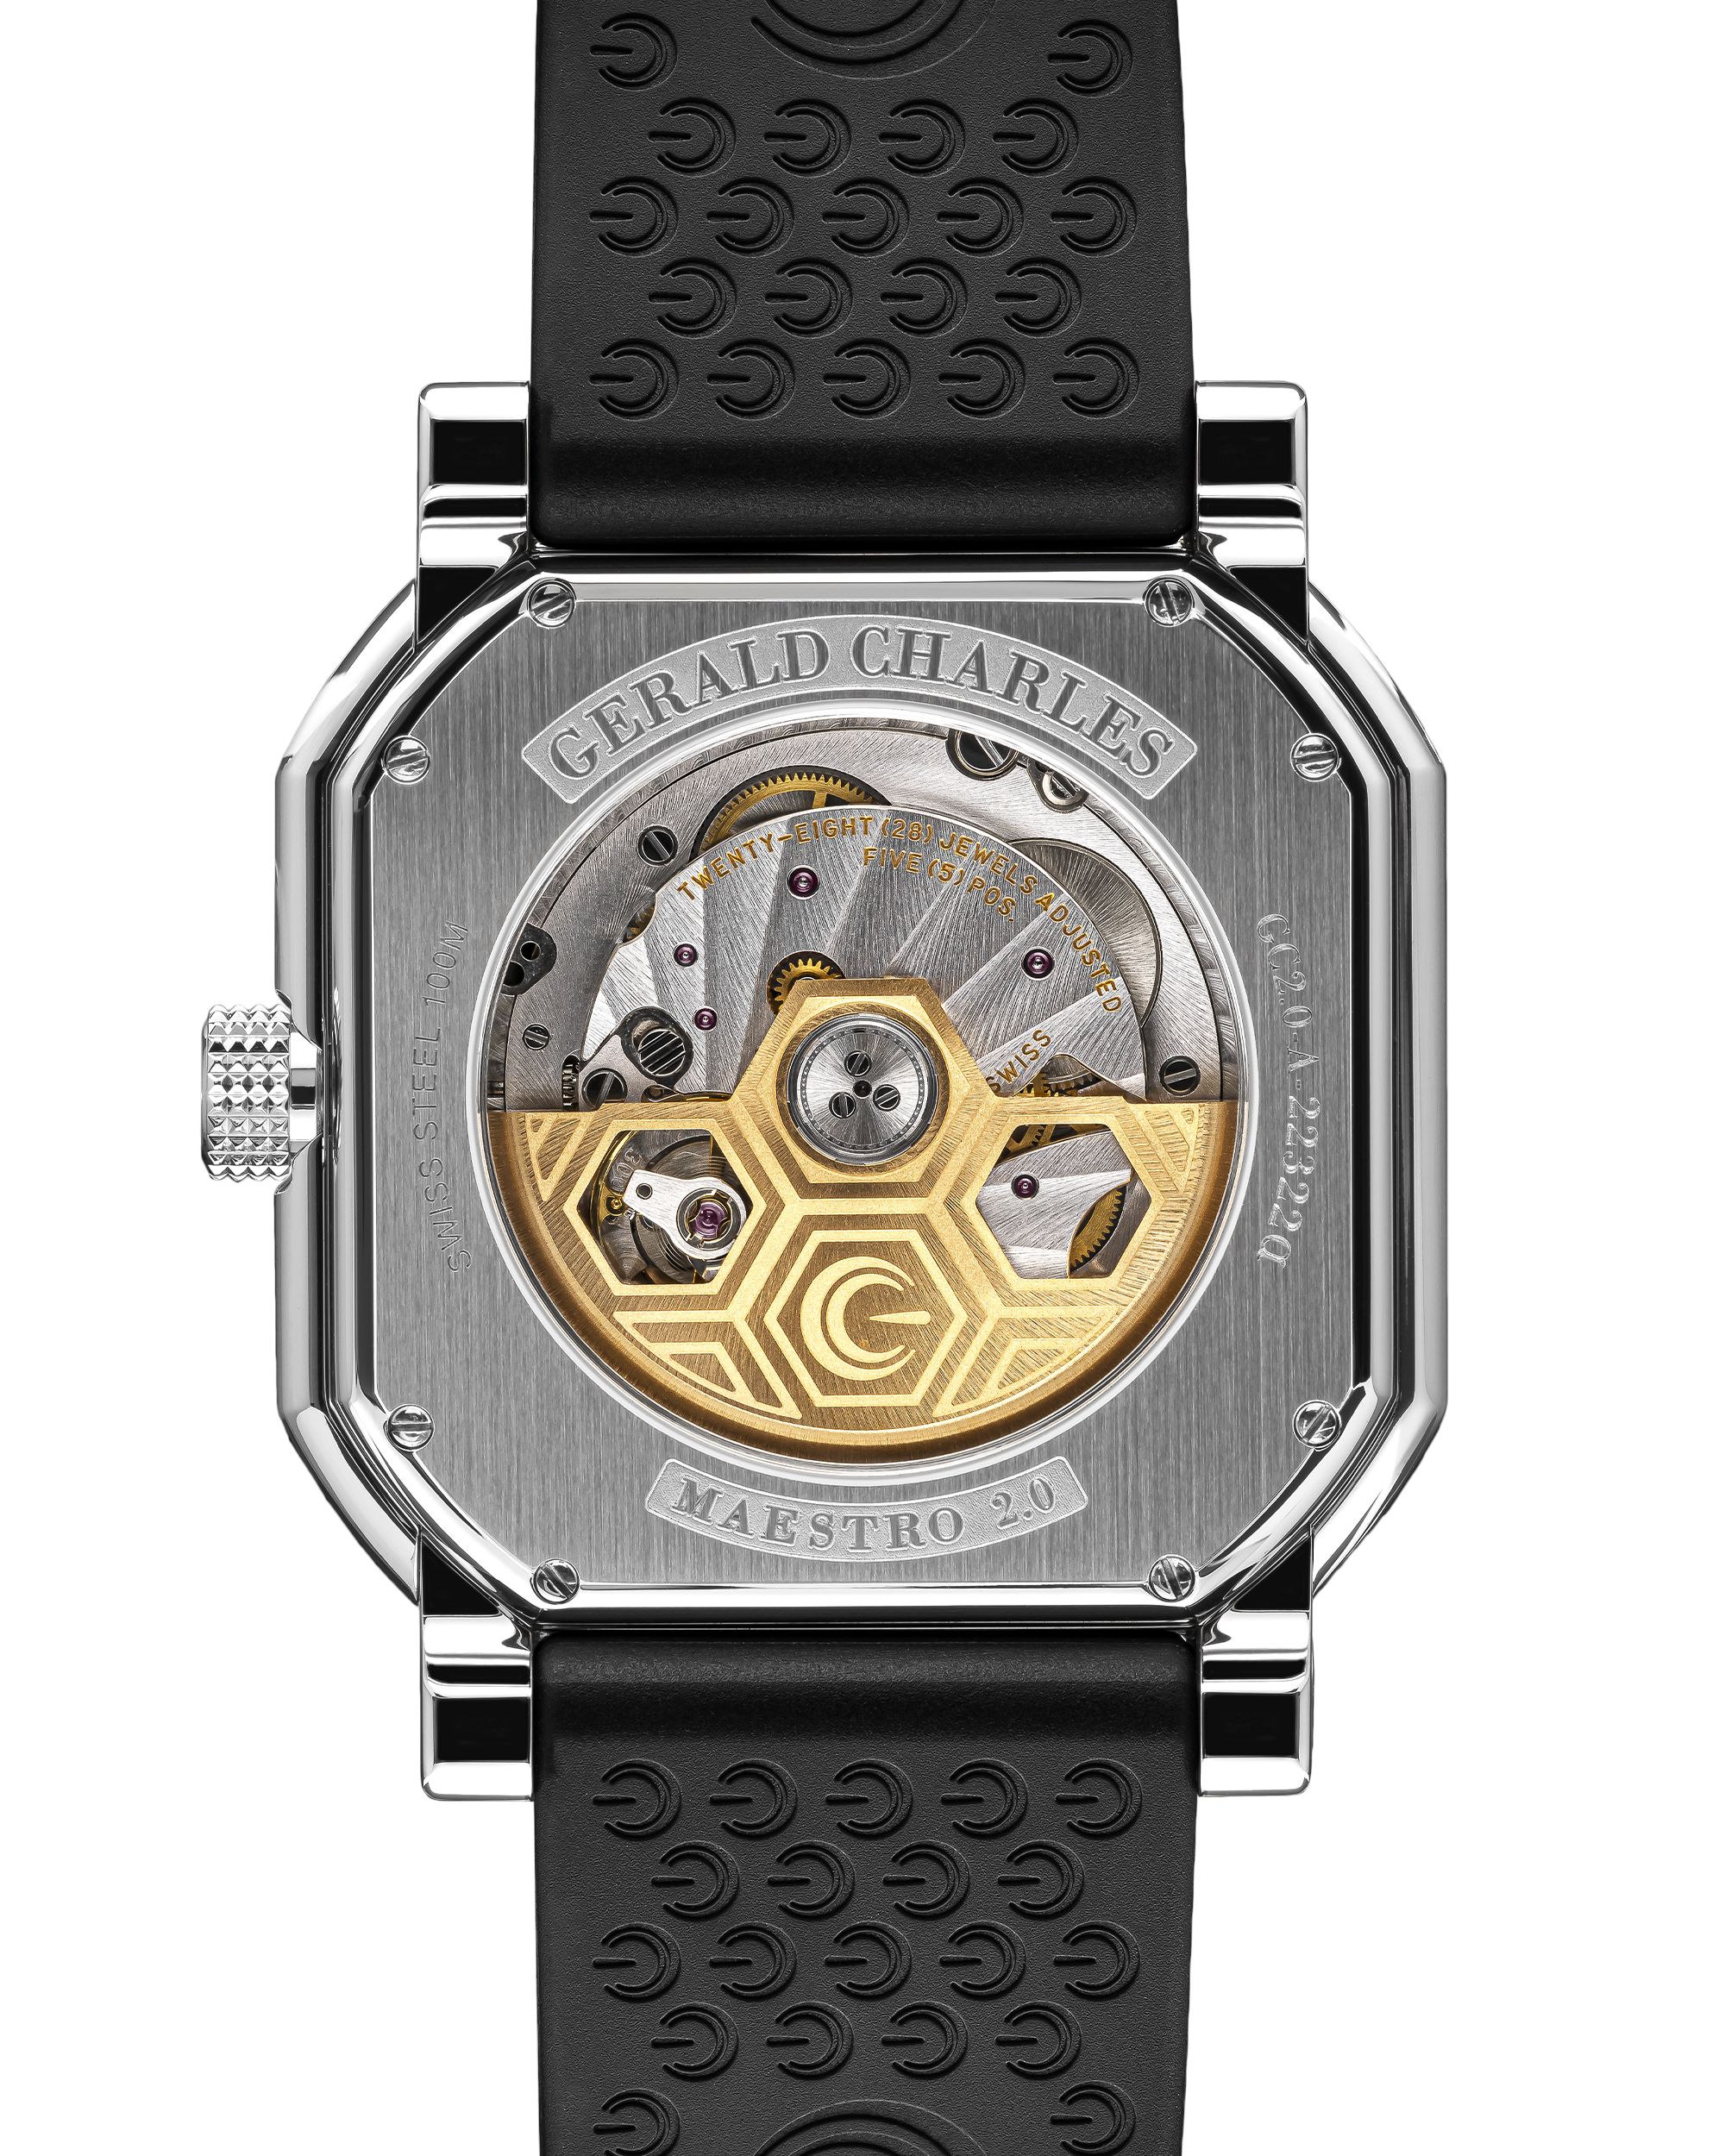 Gerald Charles Maestro 2.0 Ultra-Thin 精鋼運動錶錶背，透視超薄GCA3002自動機芯